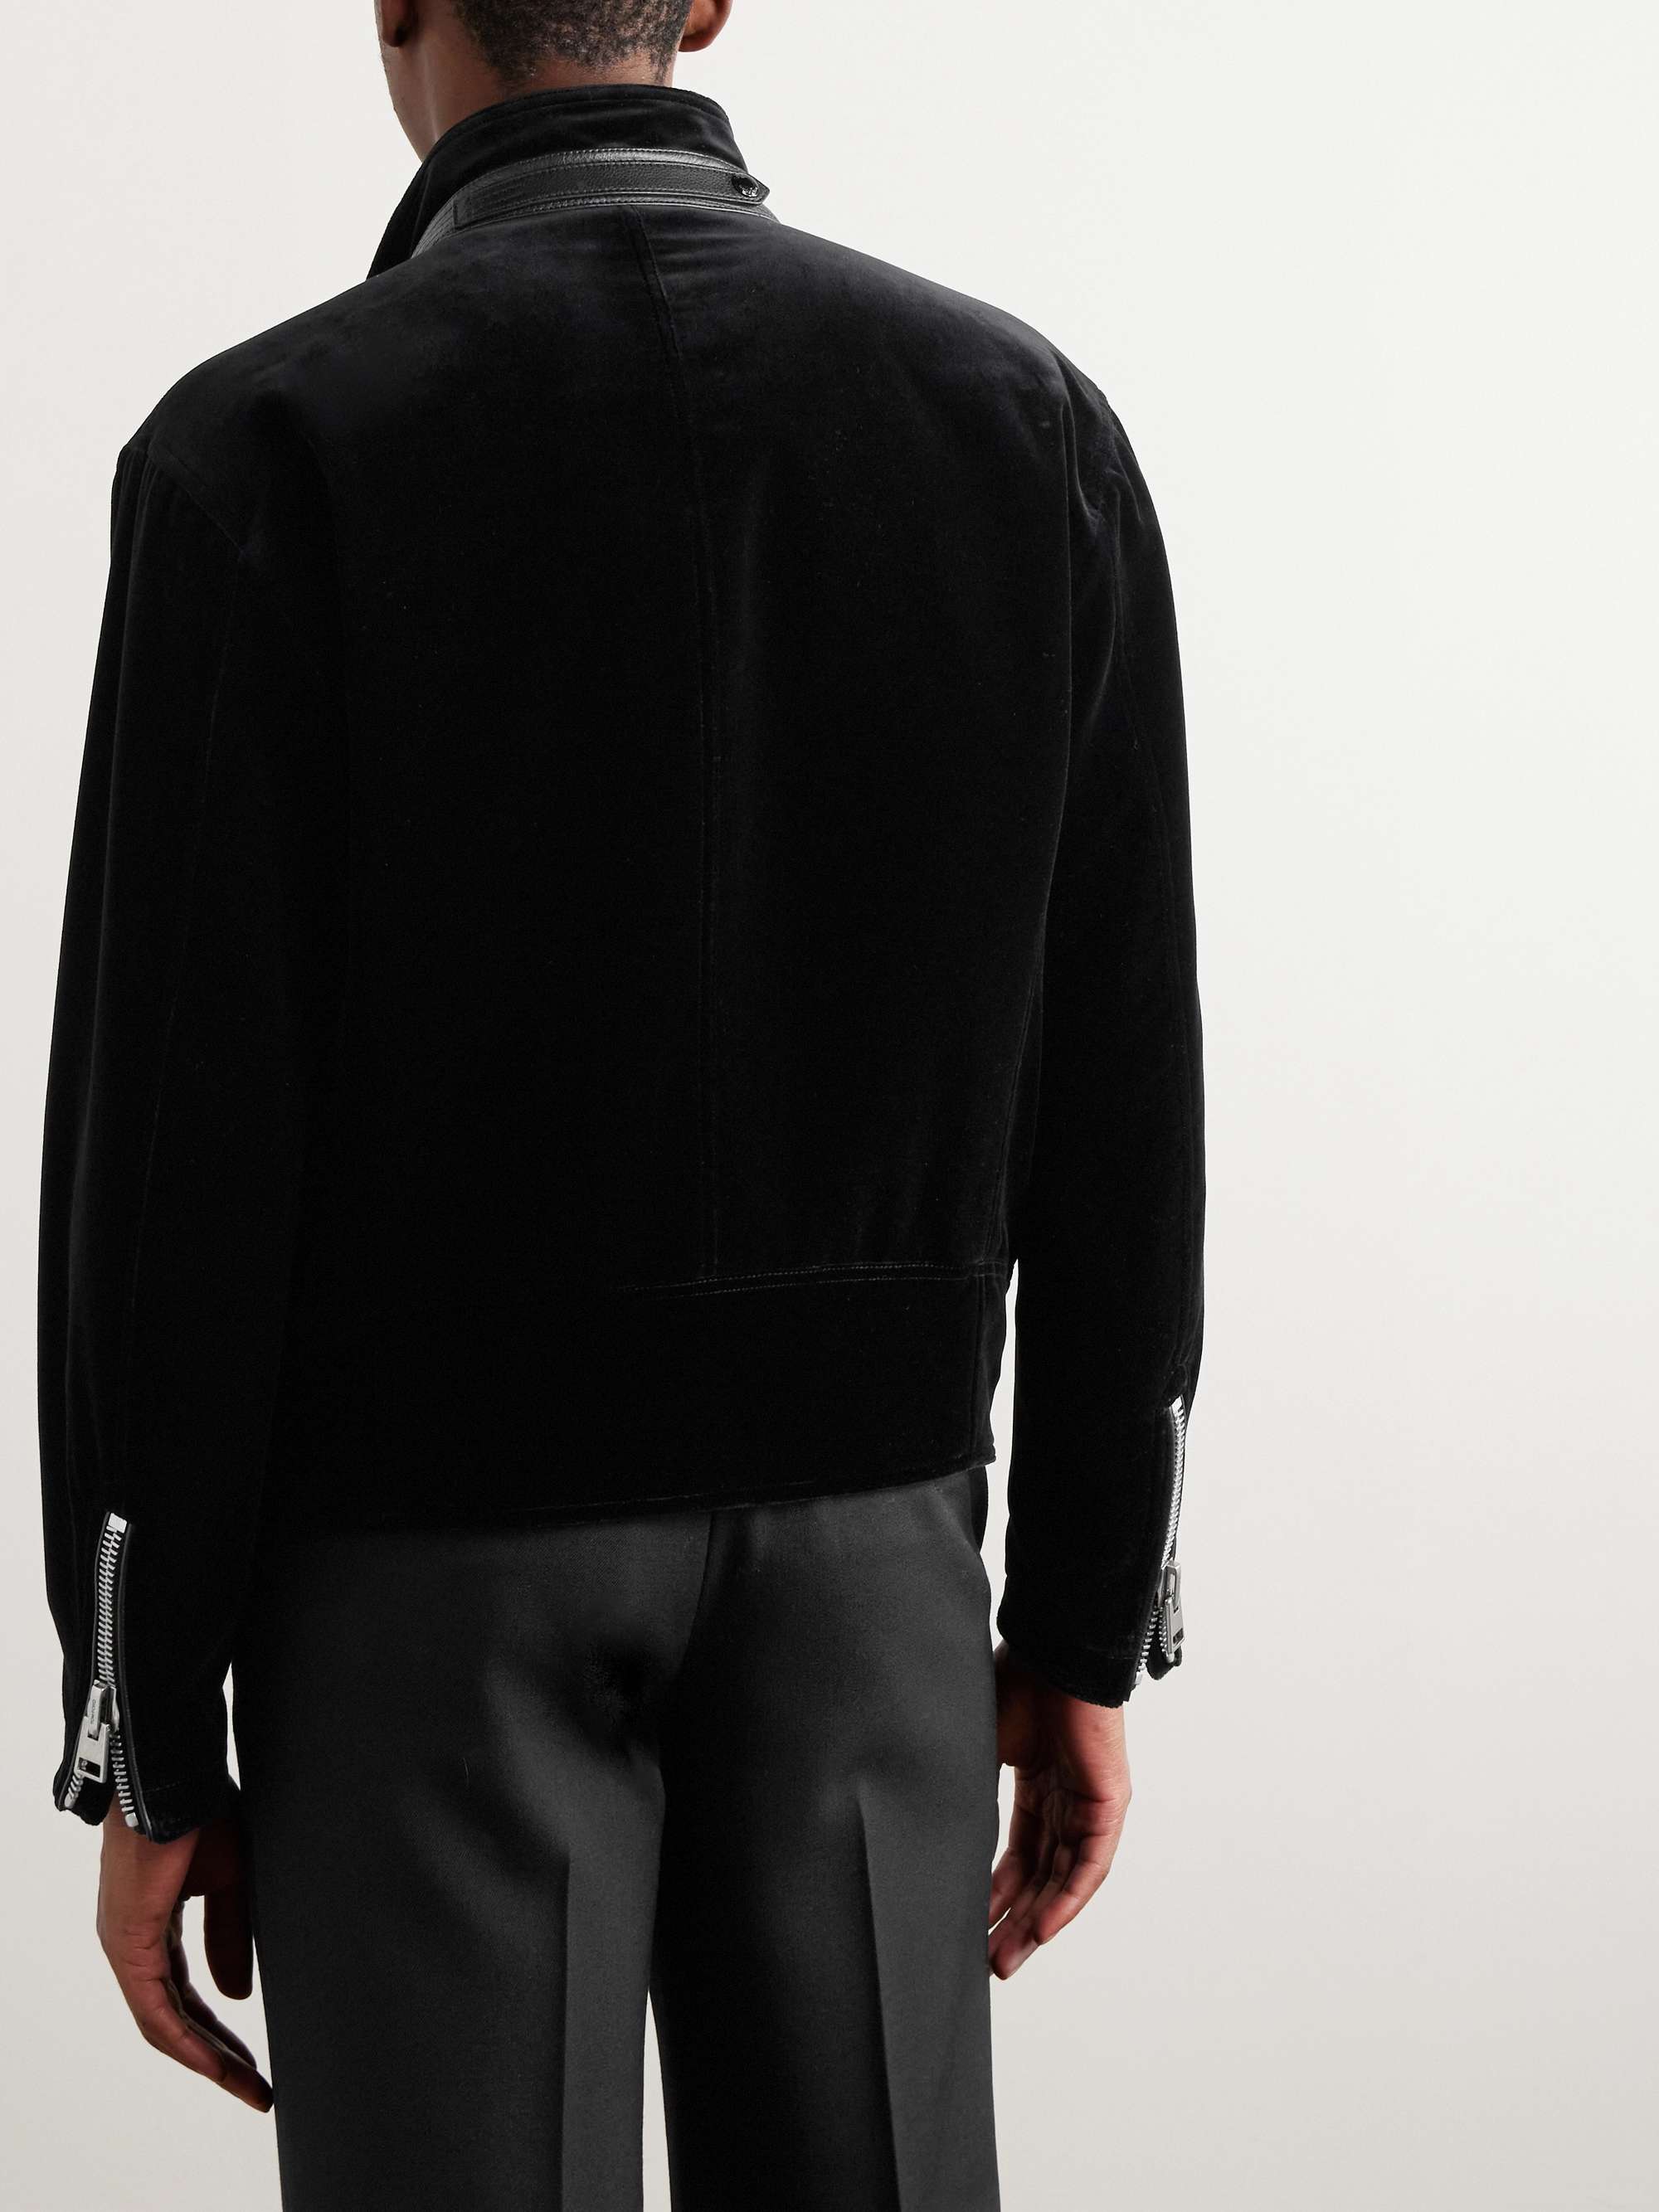 TOM FORD Leather-Trimmed Cotton-Velvet Biker Jacket for Men | MR PORTER